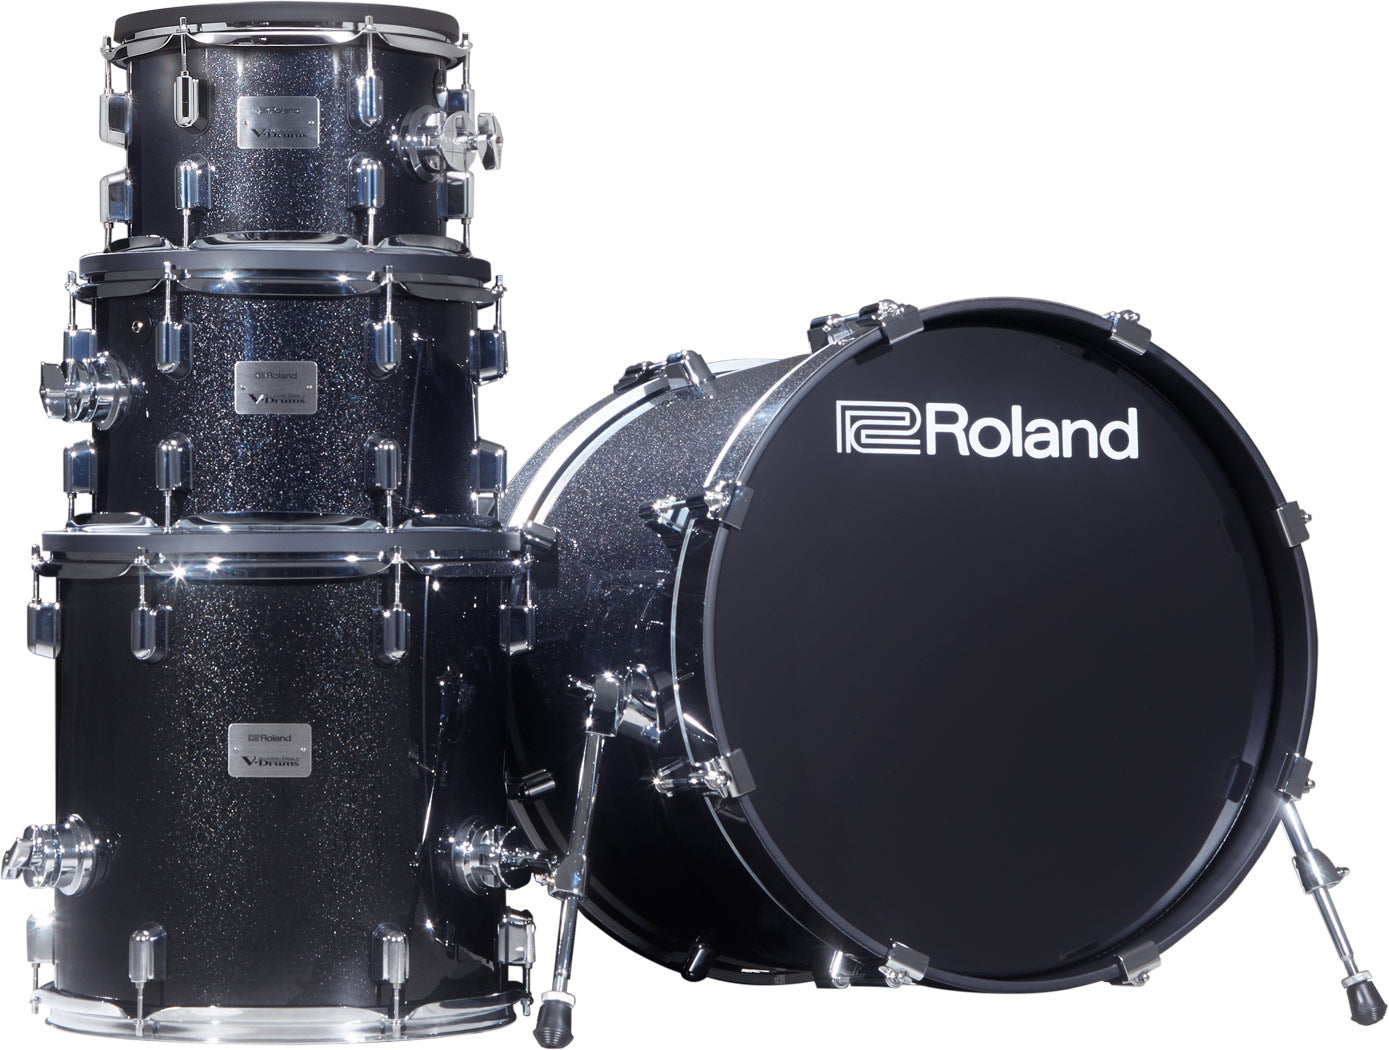 V-Drums Acoustic Design Series 506 Drum Kit w/TD-27 Module